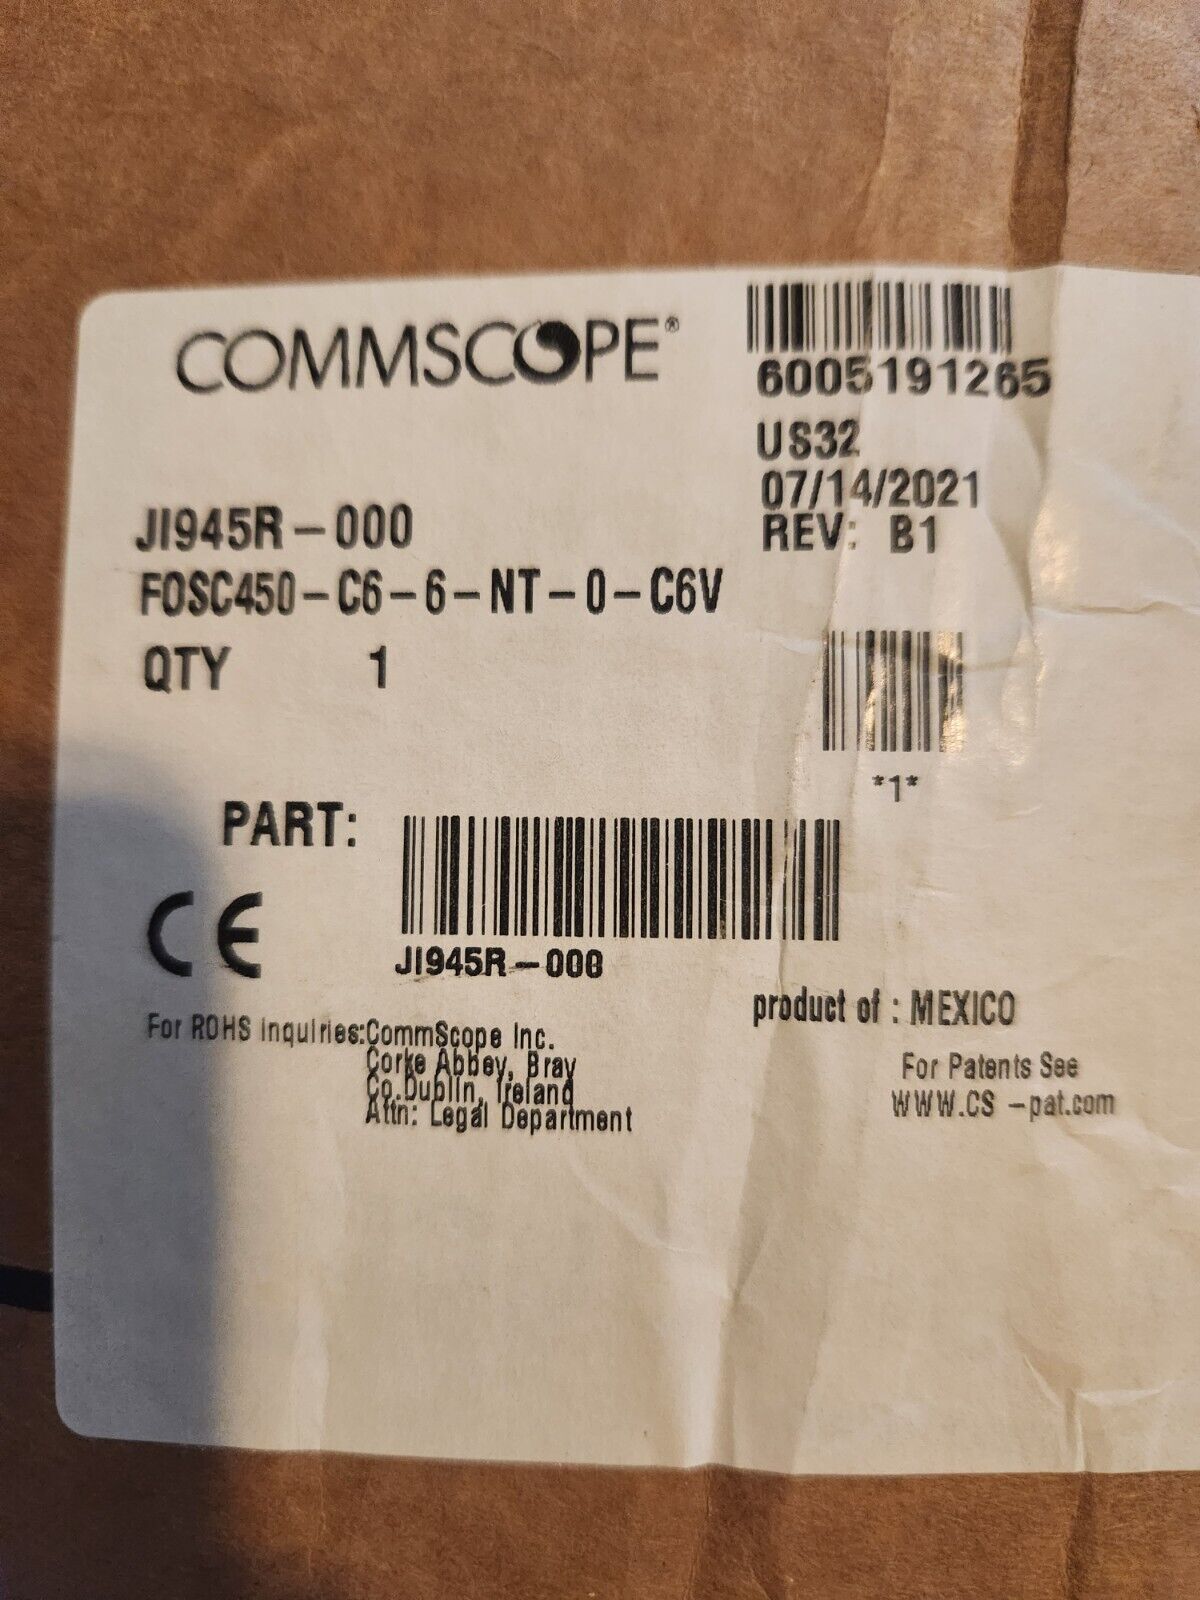 CommScope FOSC450-C6-6-NT-0-C6V Fiber Optic Splice Closure JI945R-000